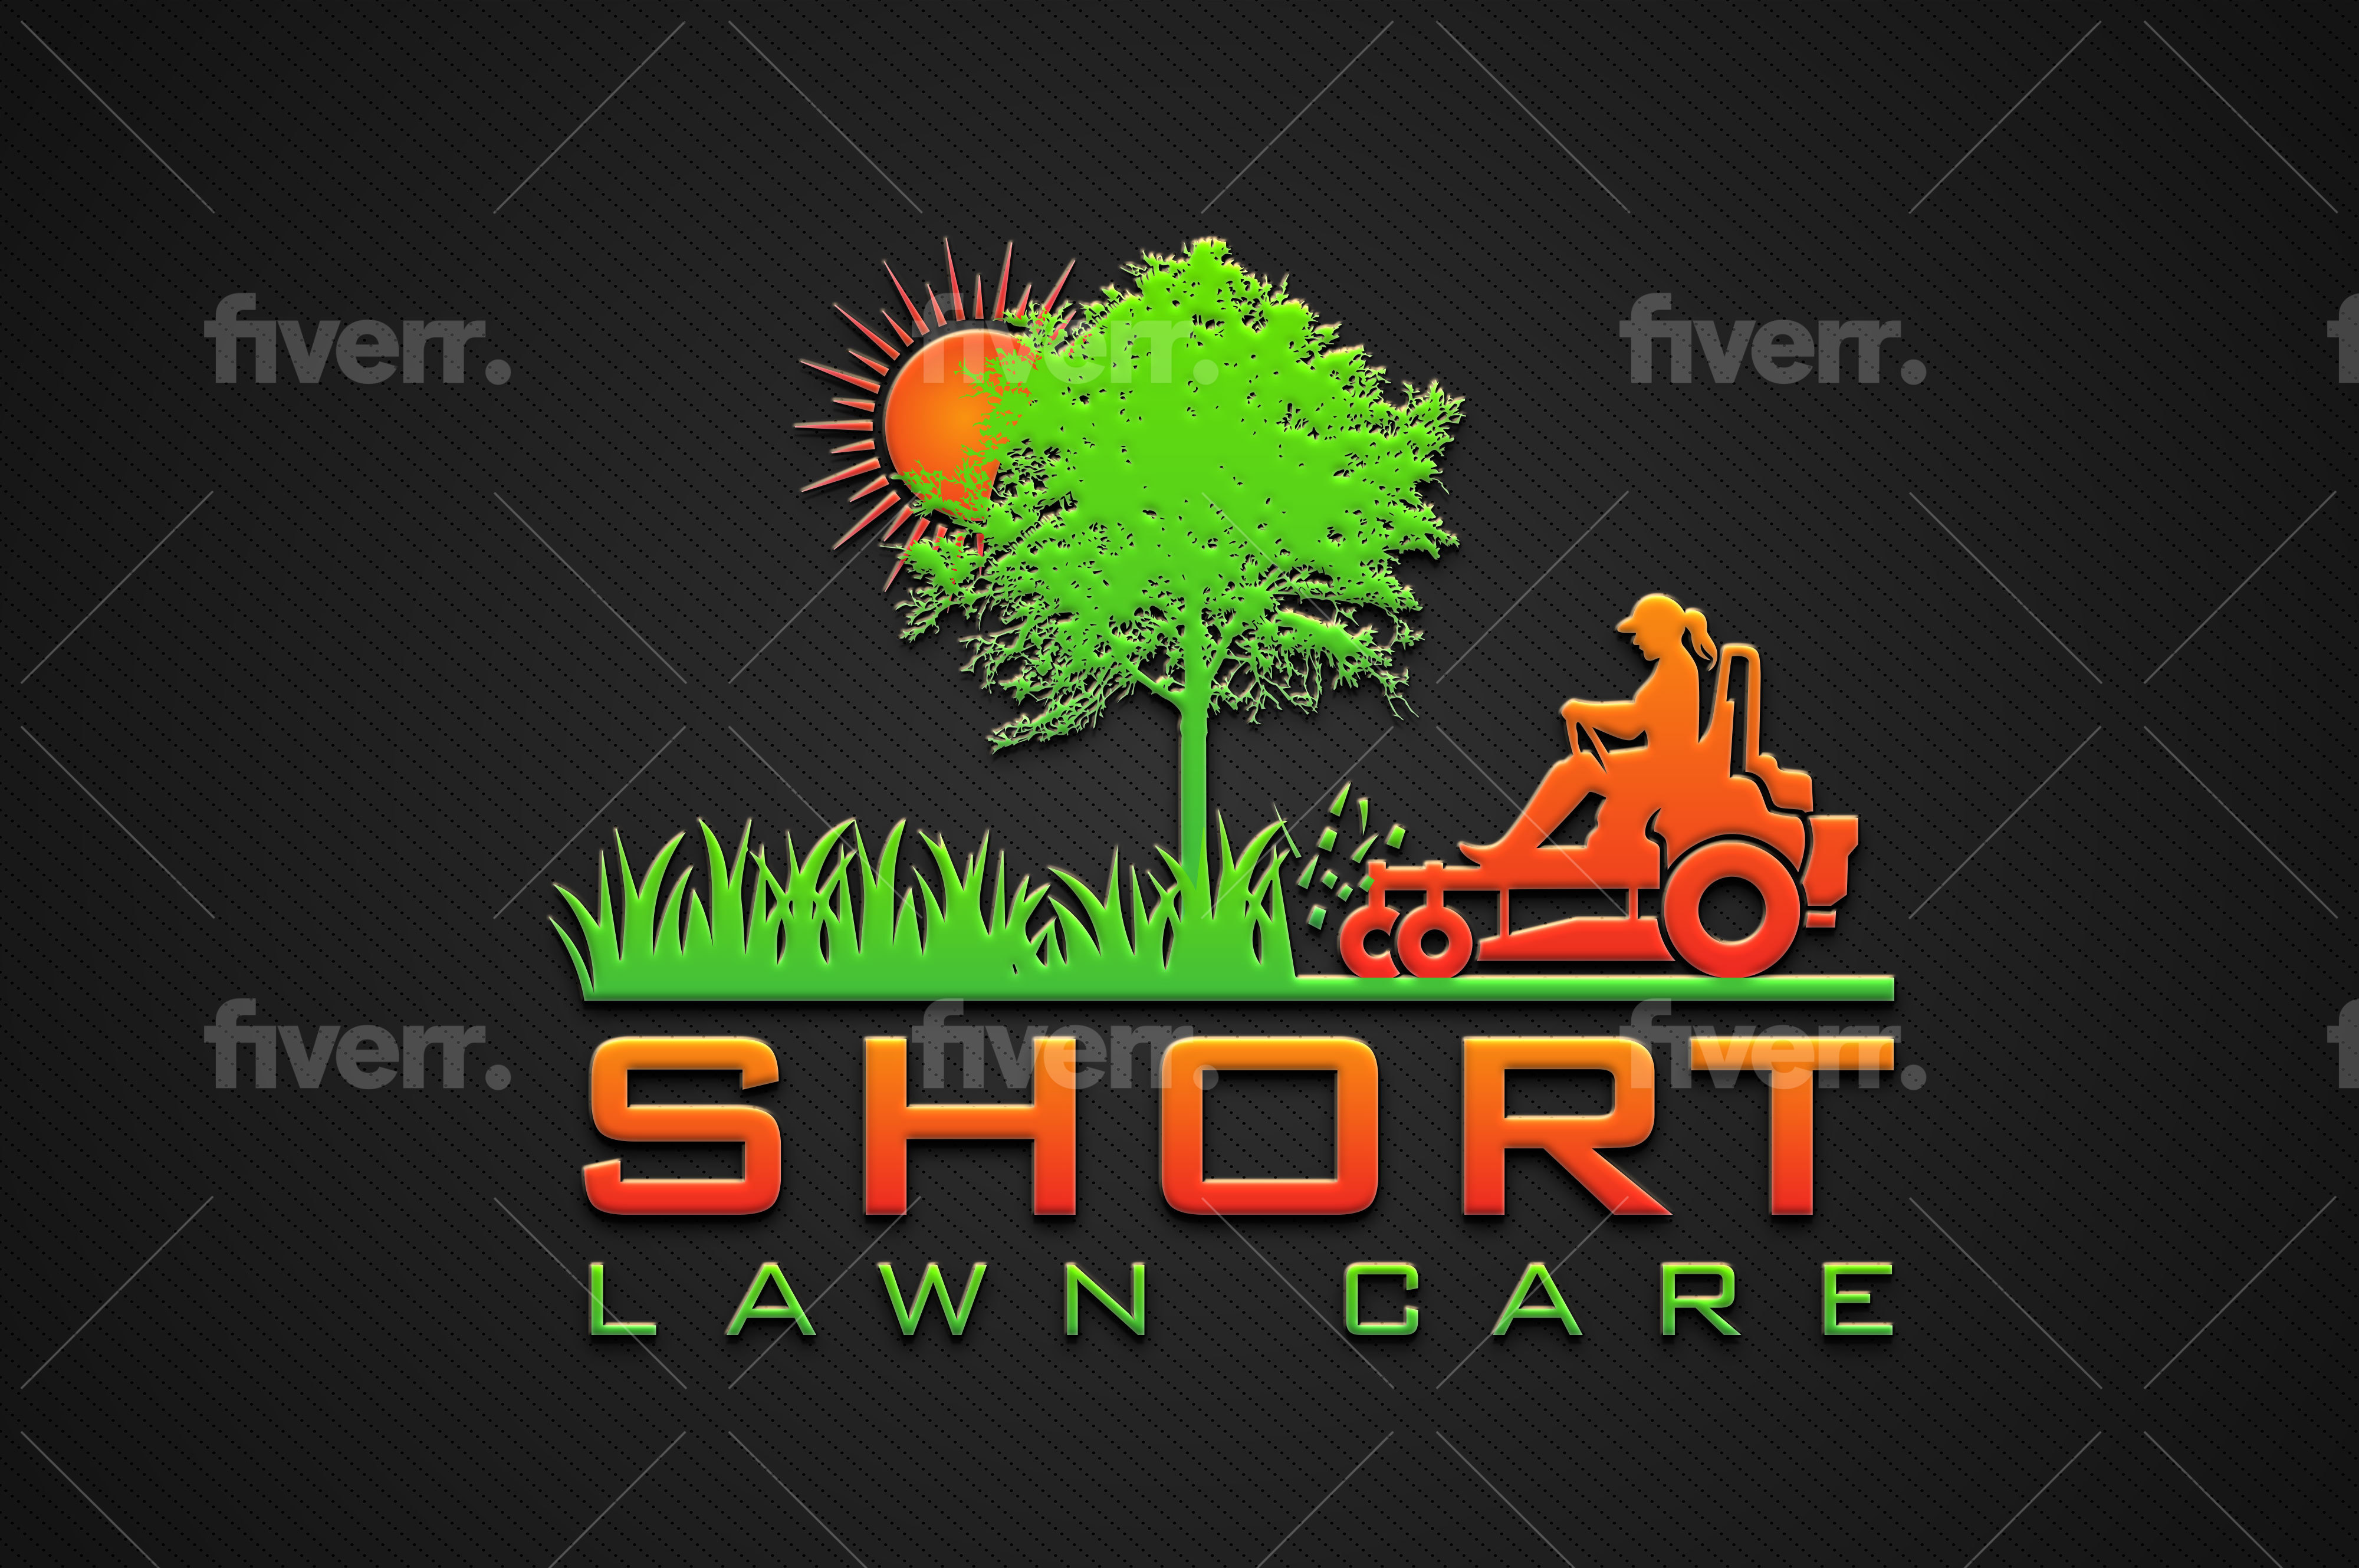 Short Lawn Care southaven MS Image